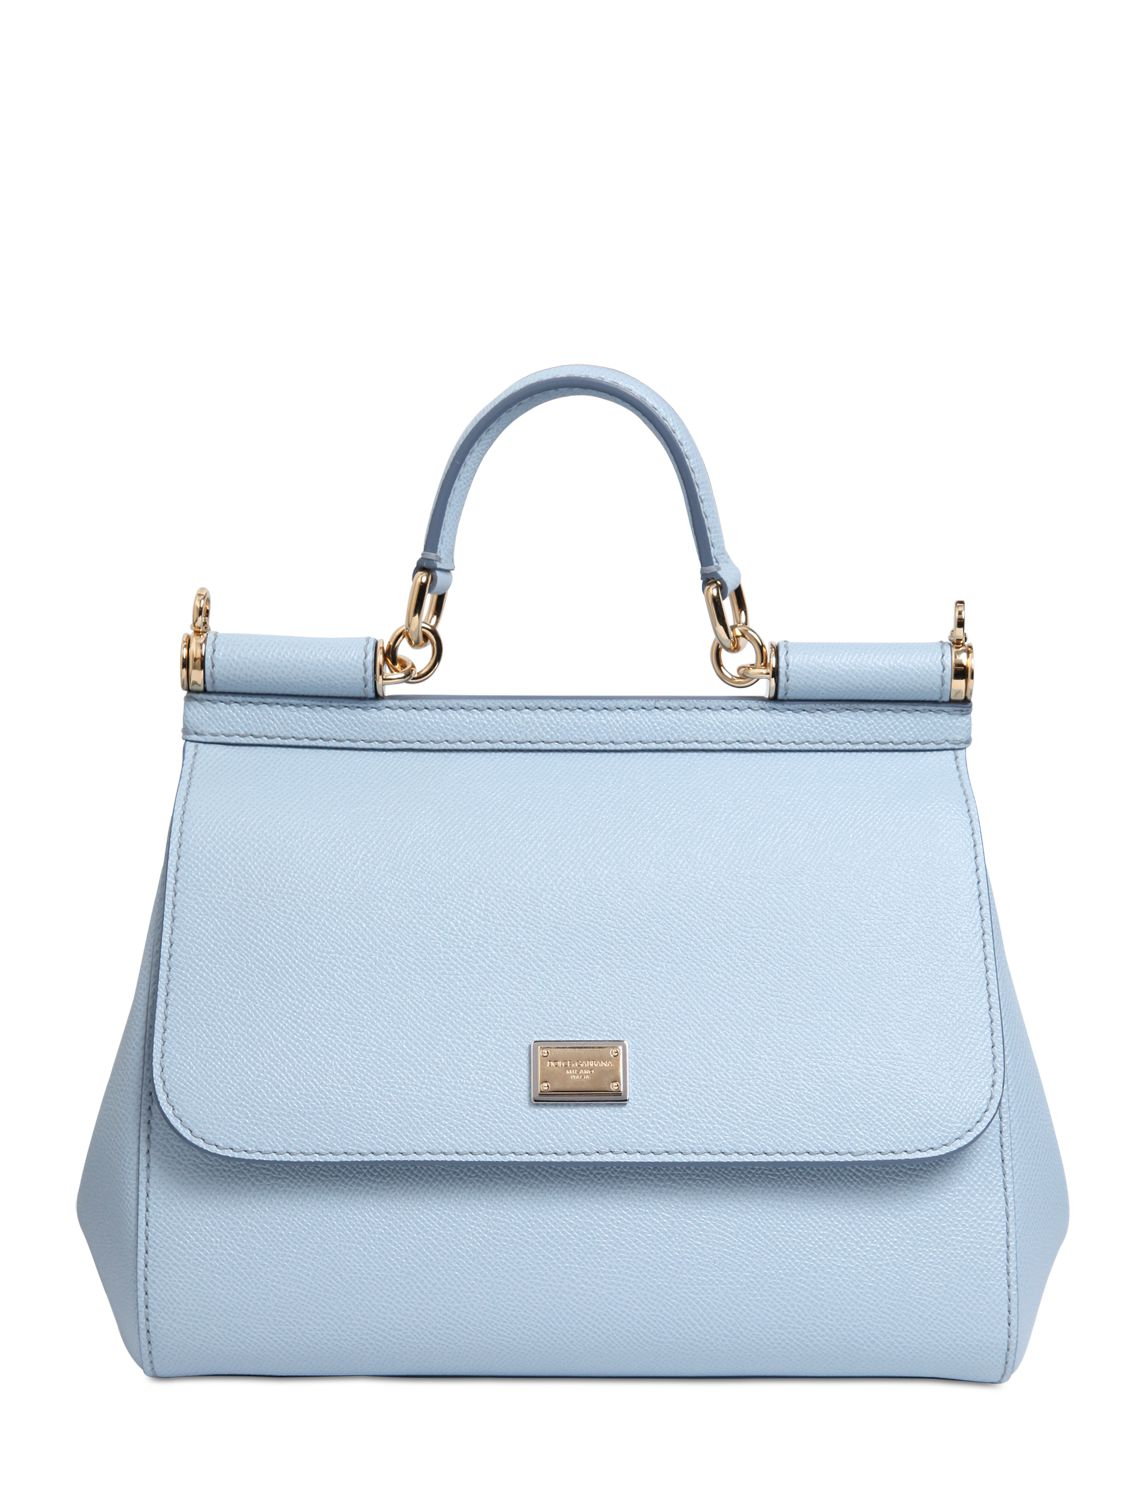 Dolce & Gabbana Medium Sicily Dauphine Leather Bag in Blue | Lyst